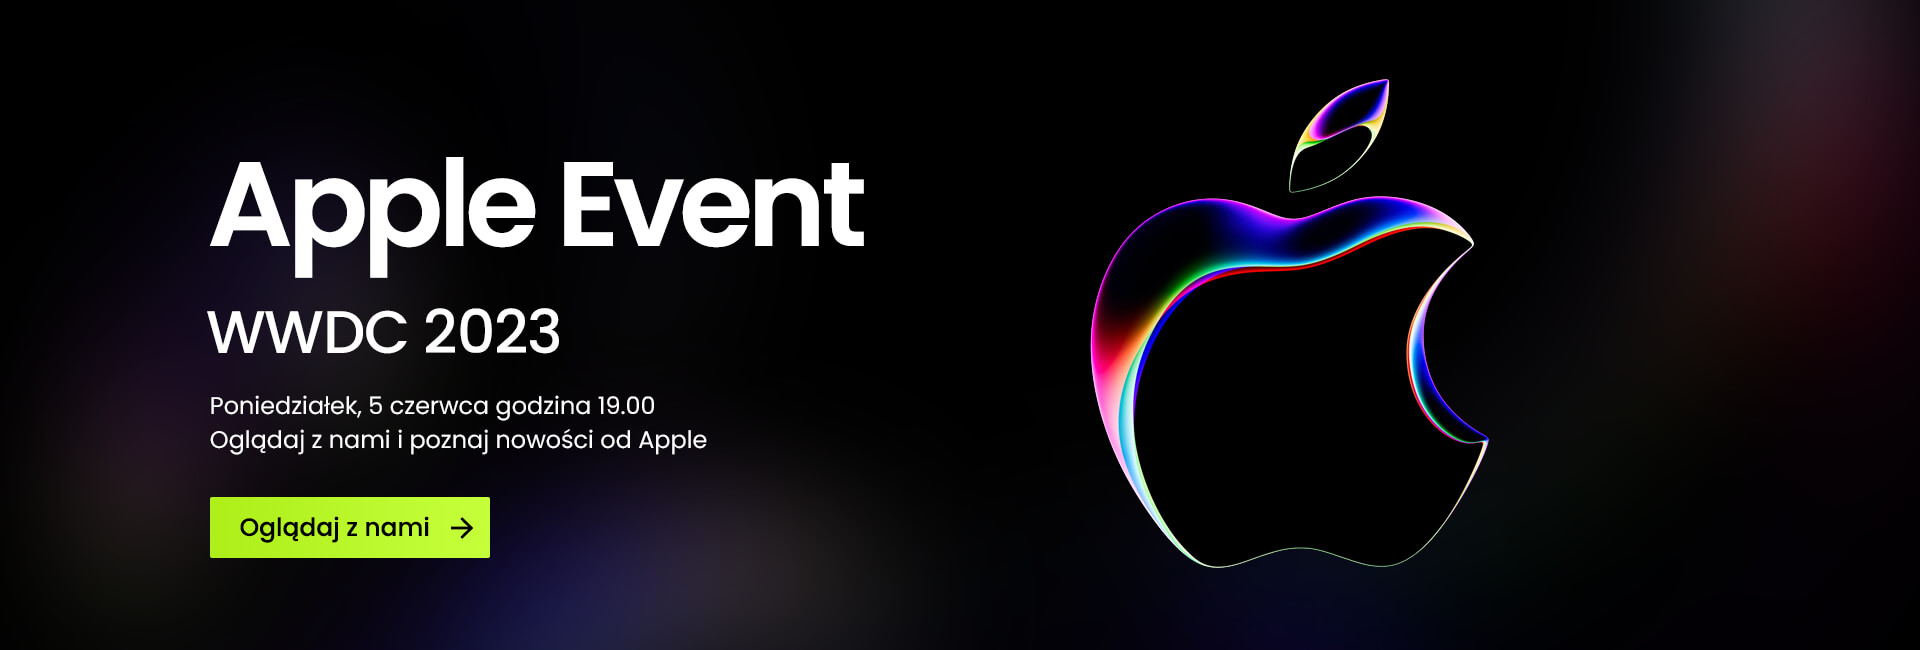 Oglądaj z nami Apple Event - WWDC 2023